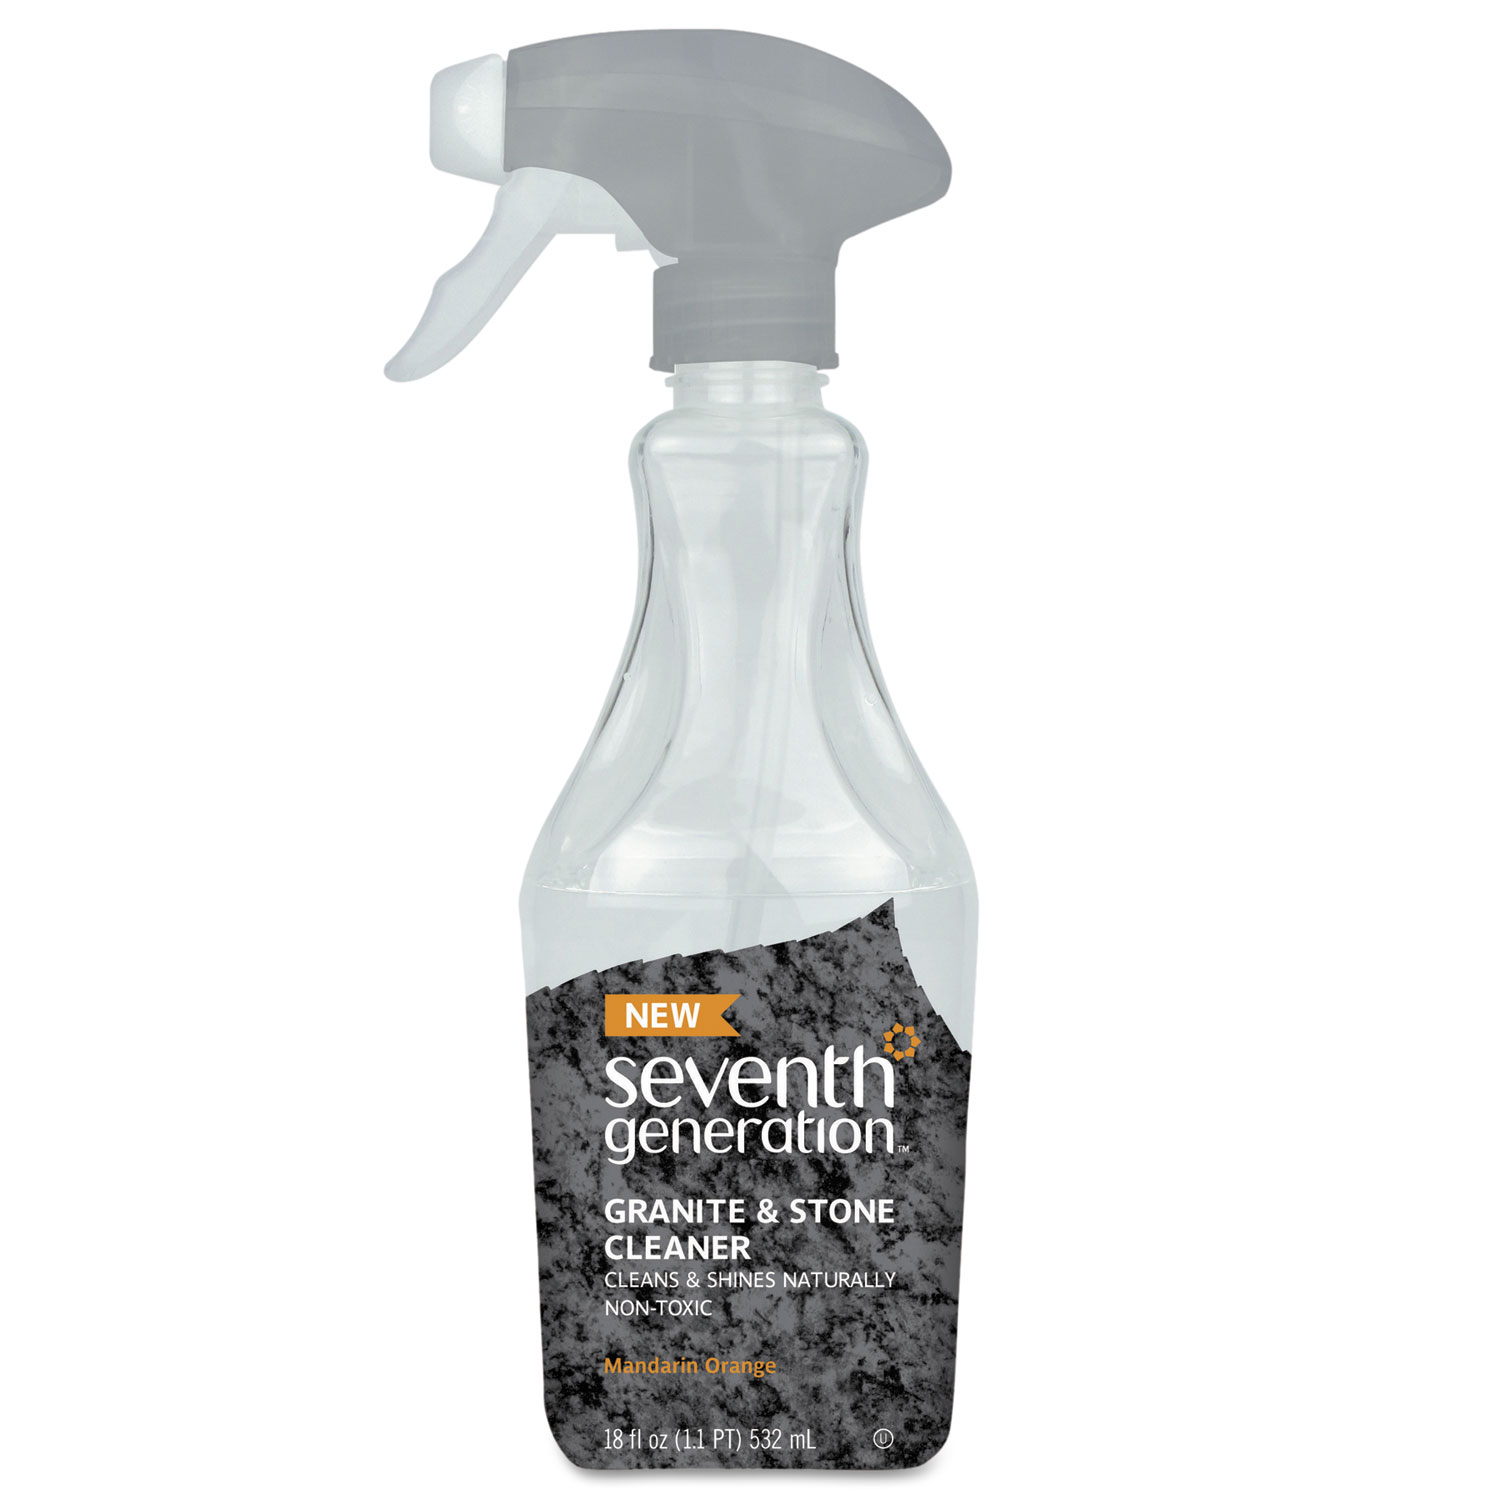  Seventh Generation 22858 Natural Granite & Stone Cleaner, Mandarin Orange, 18 oz Spray Bottle (SEV22858) 